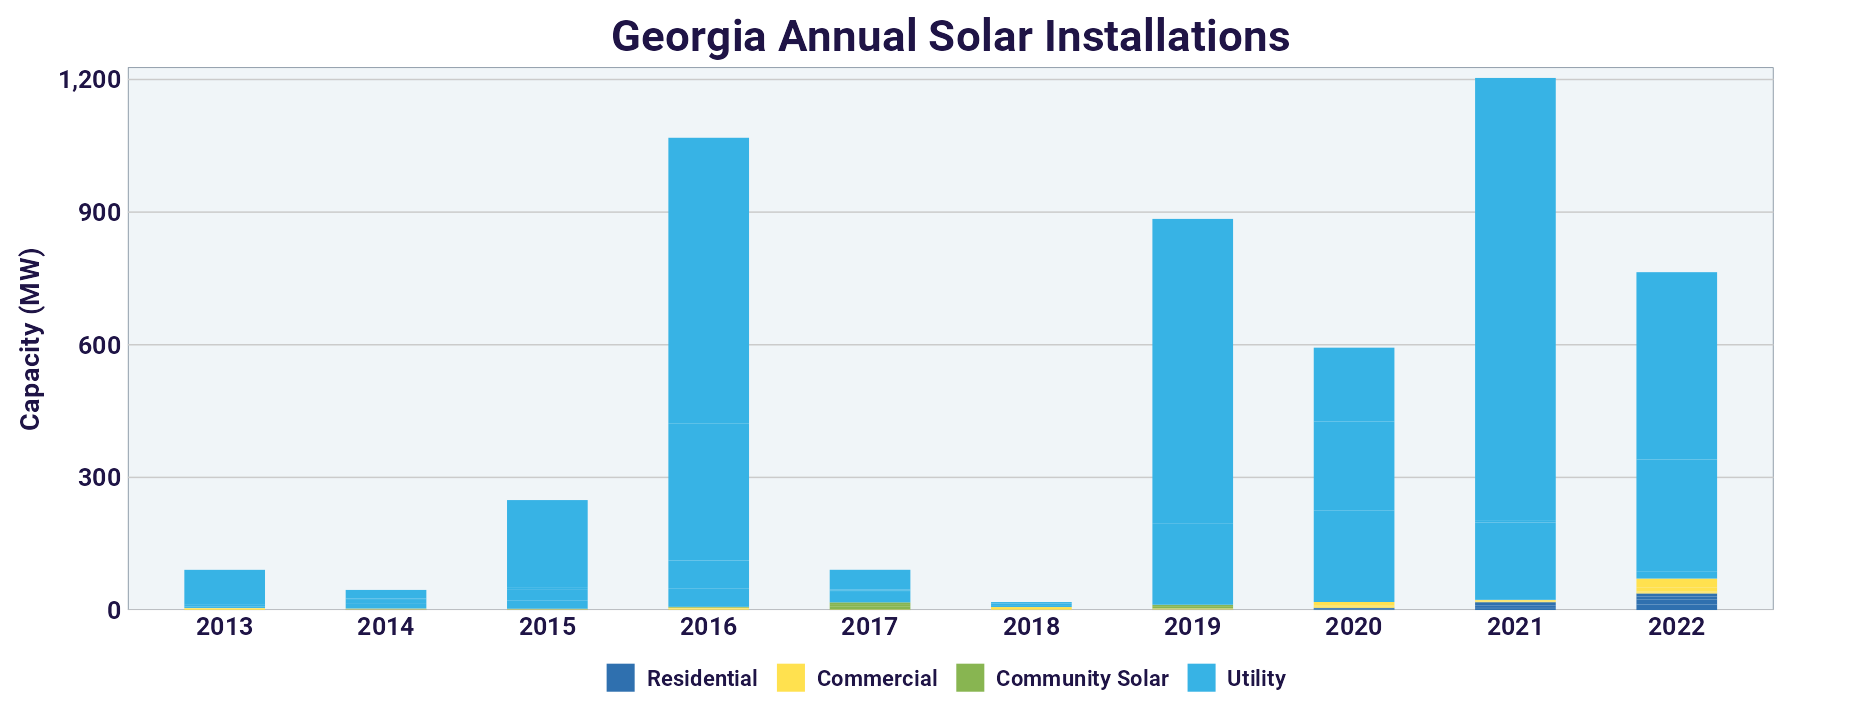 Georgia Annual Solar Installations